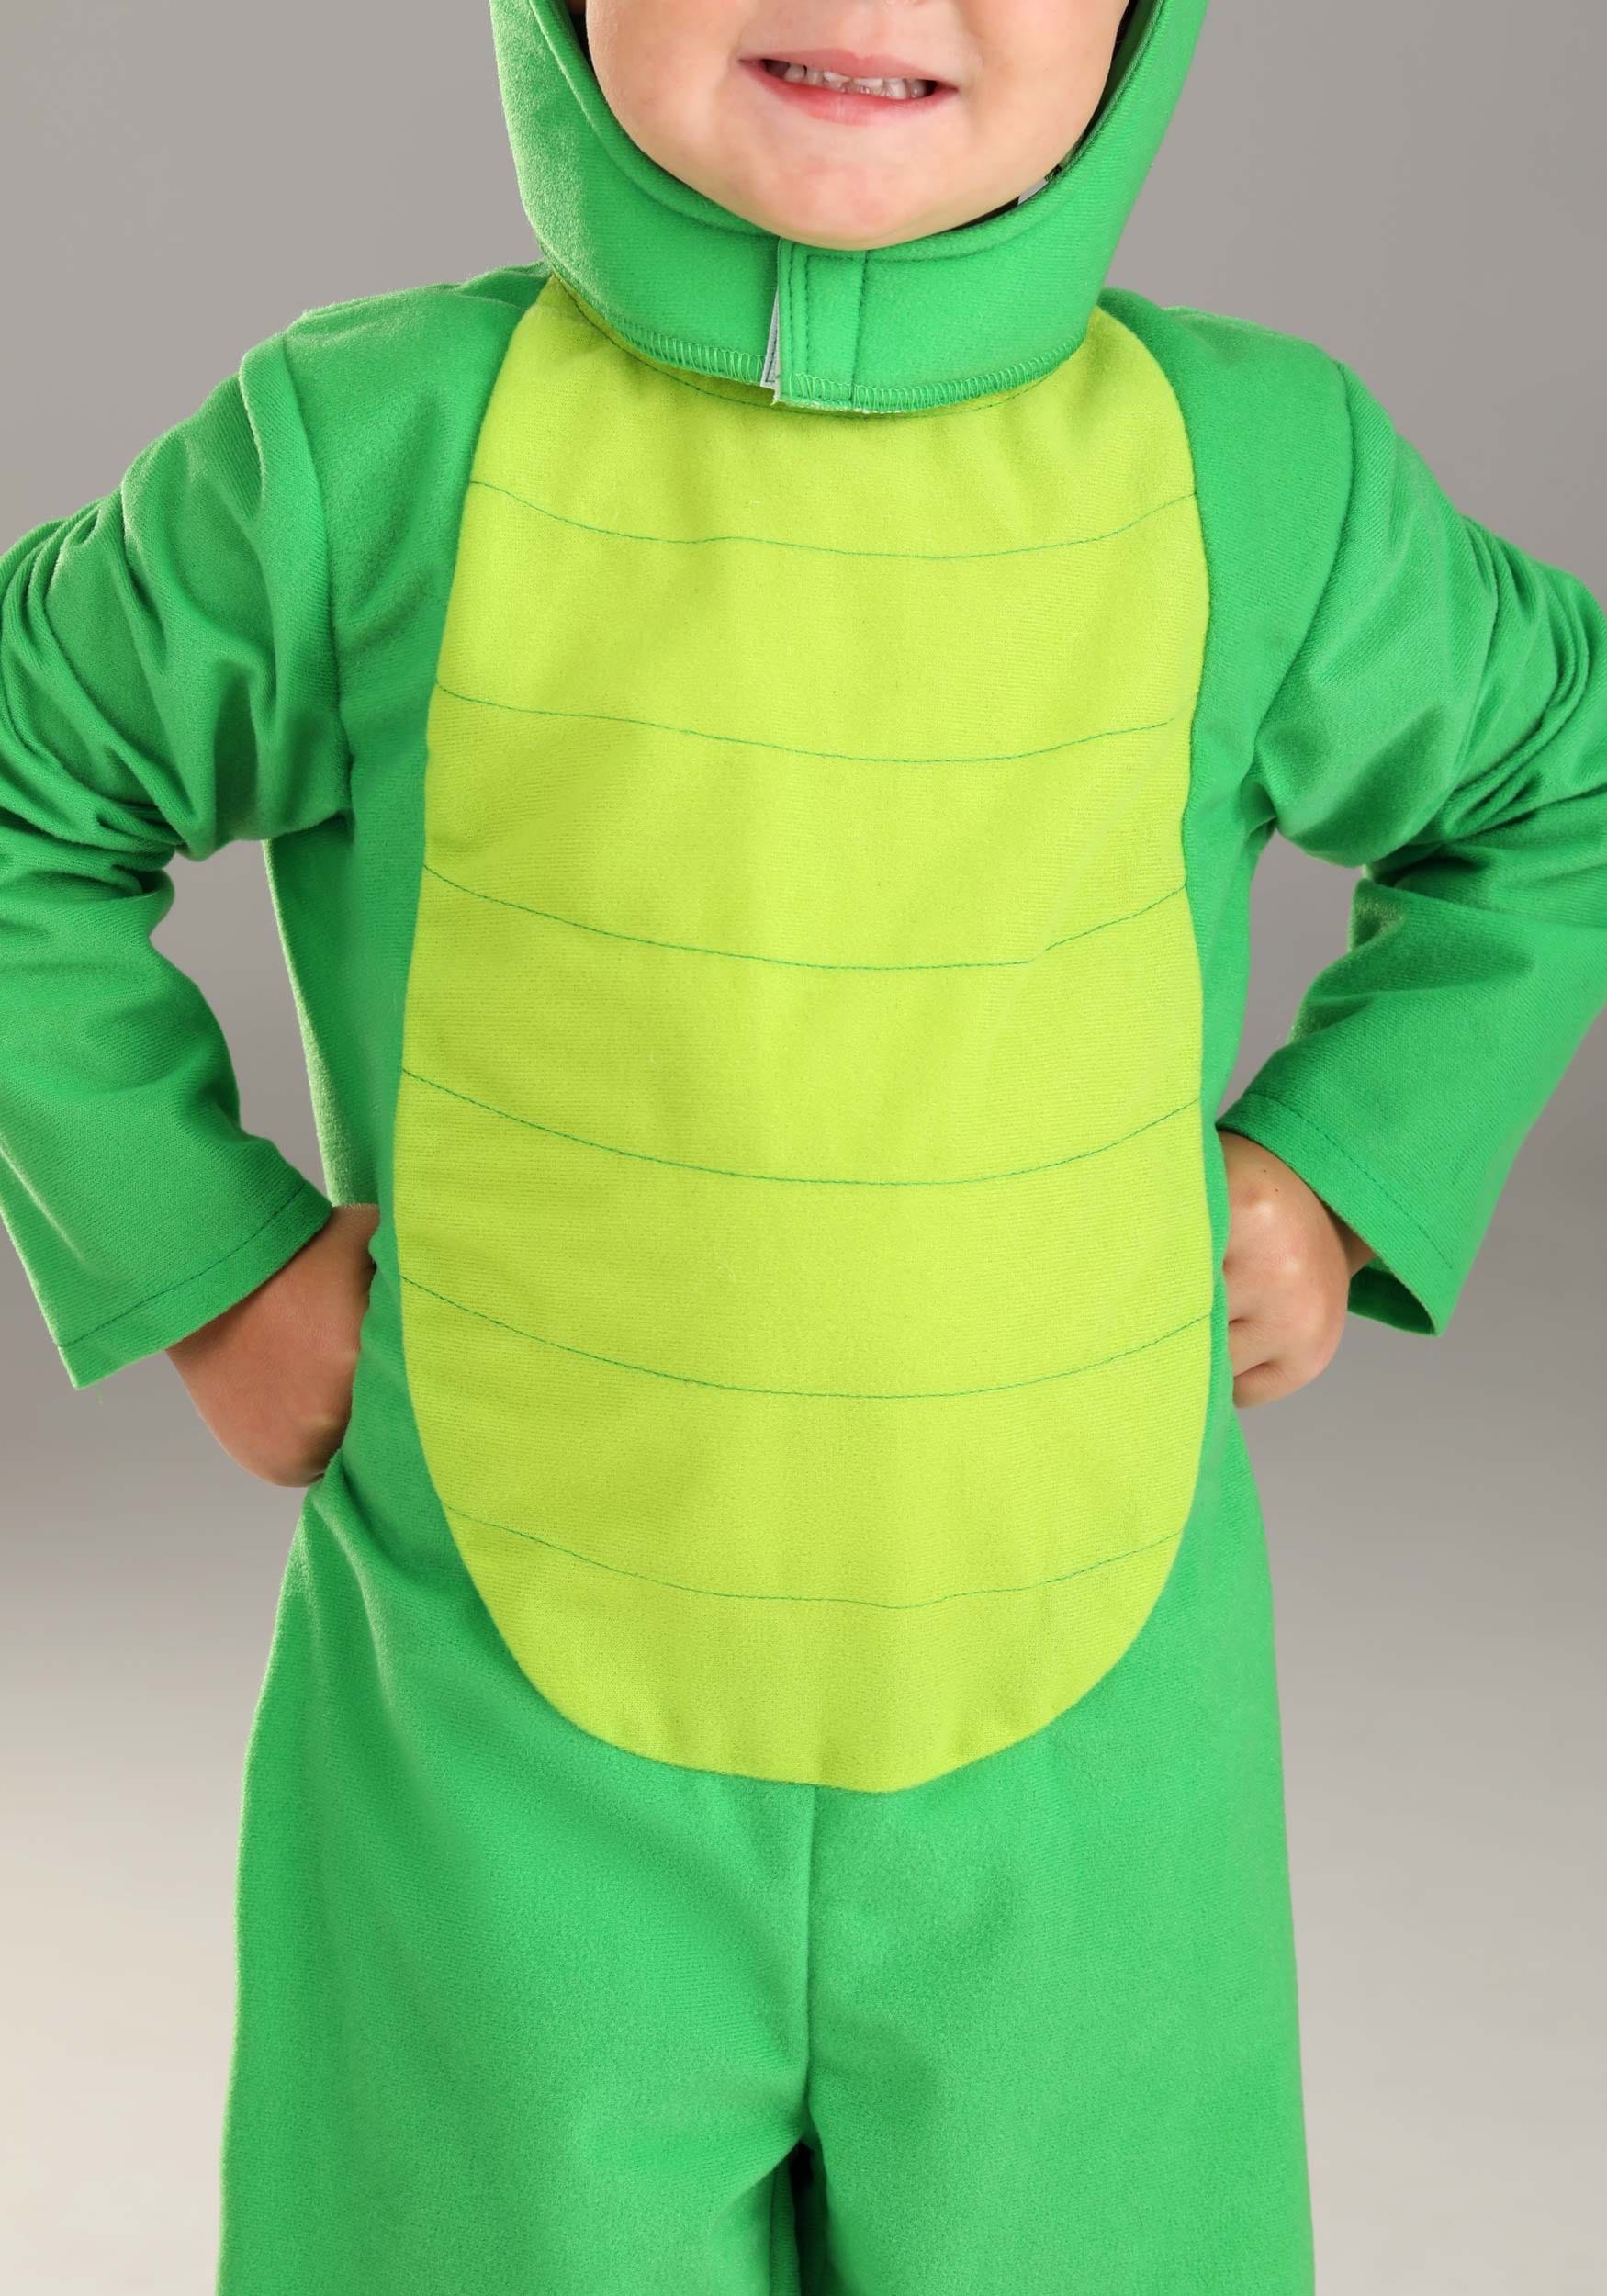 Goofy Gator Toddler Costume